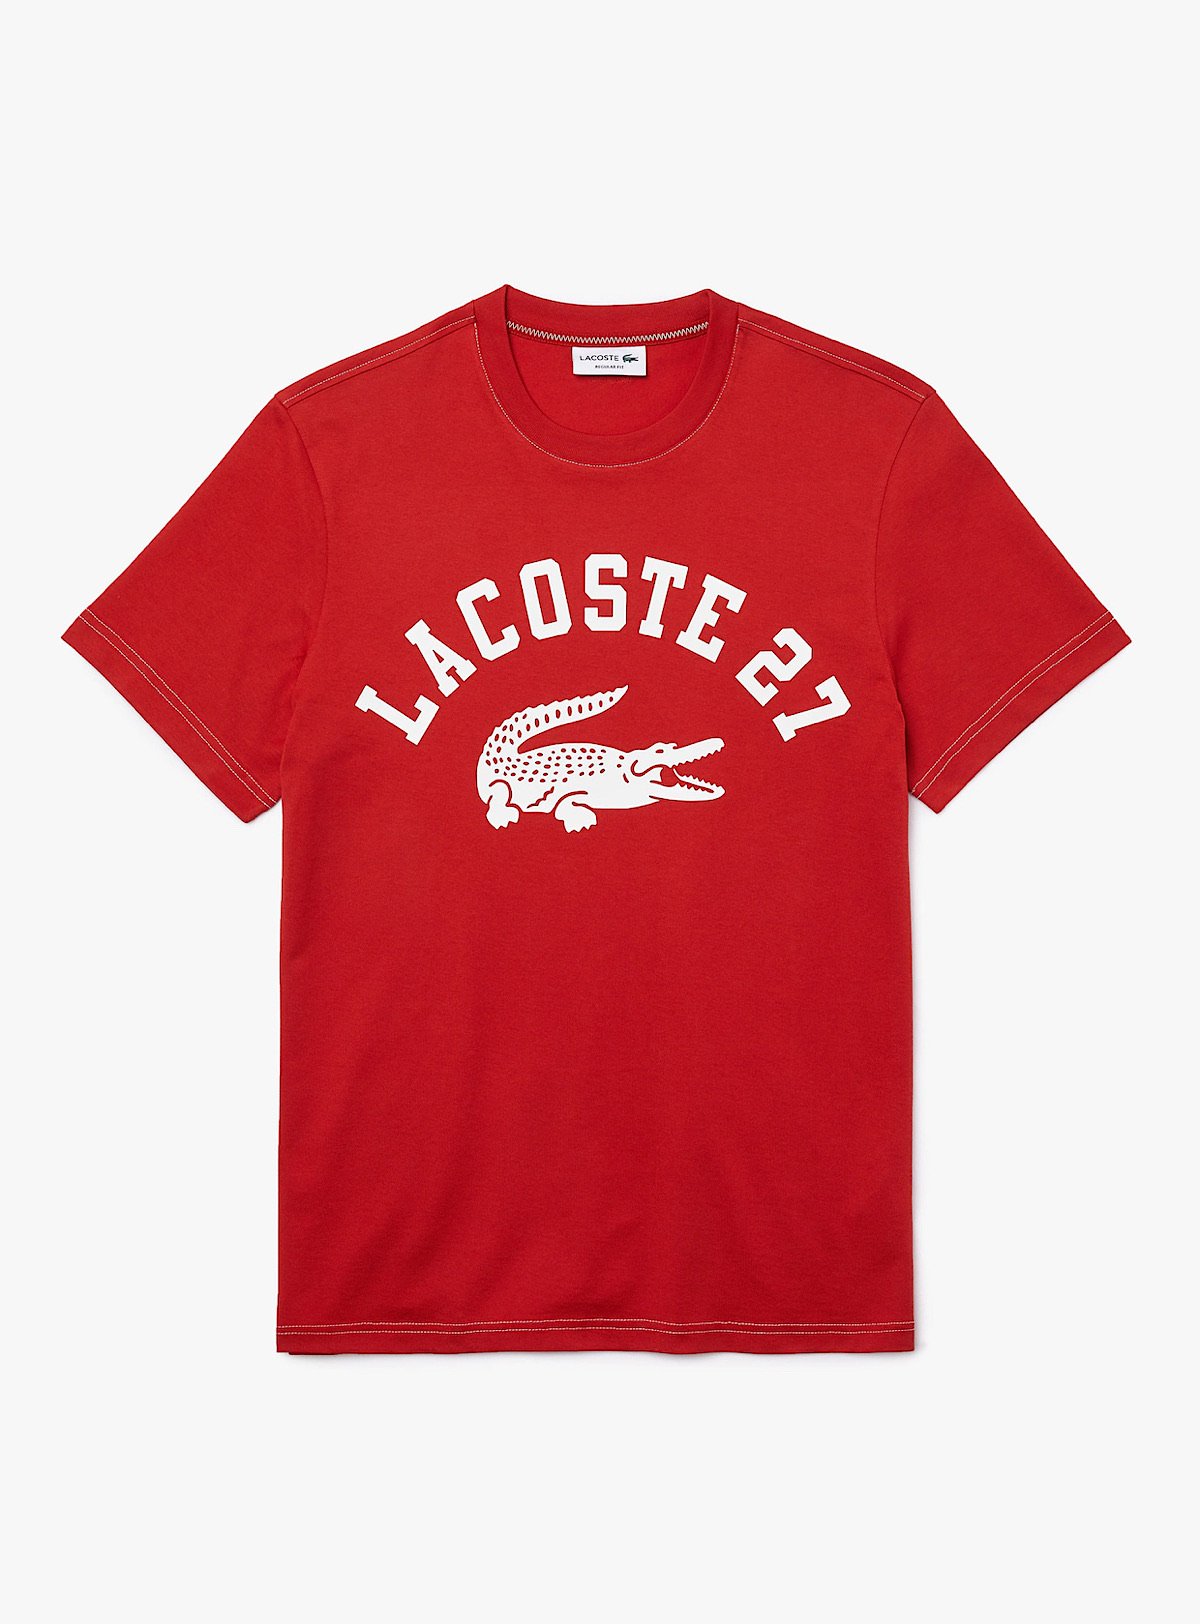 Crew Neck Lacoste 27 Print Cotton T-shirt-TH0061